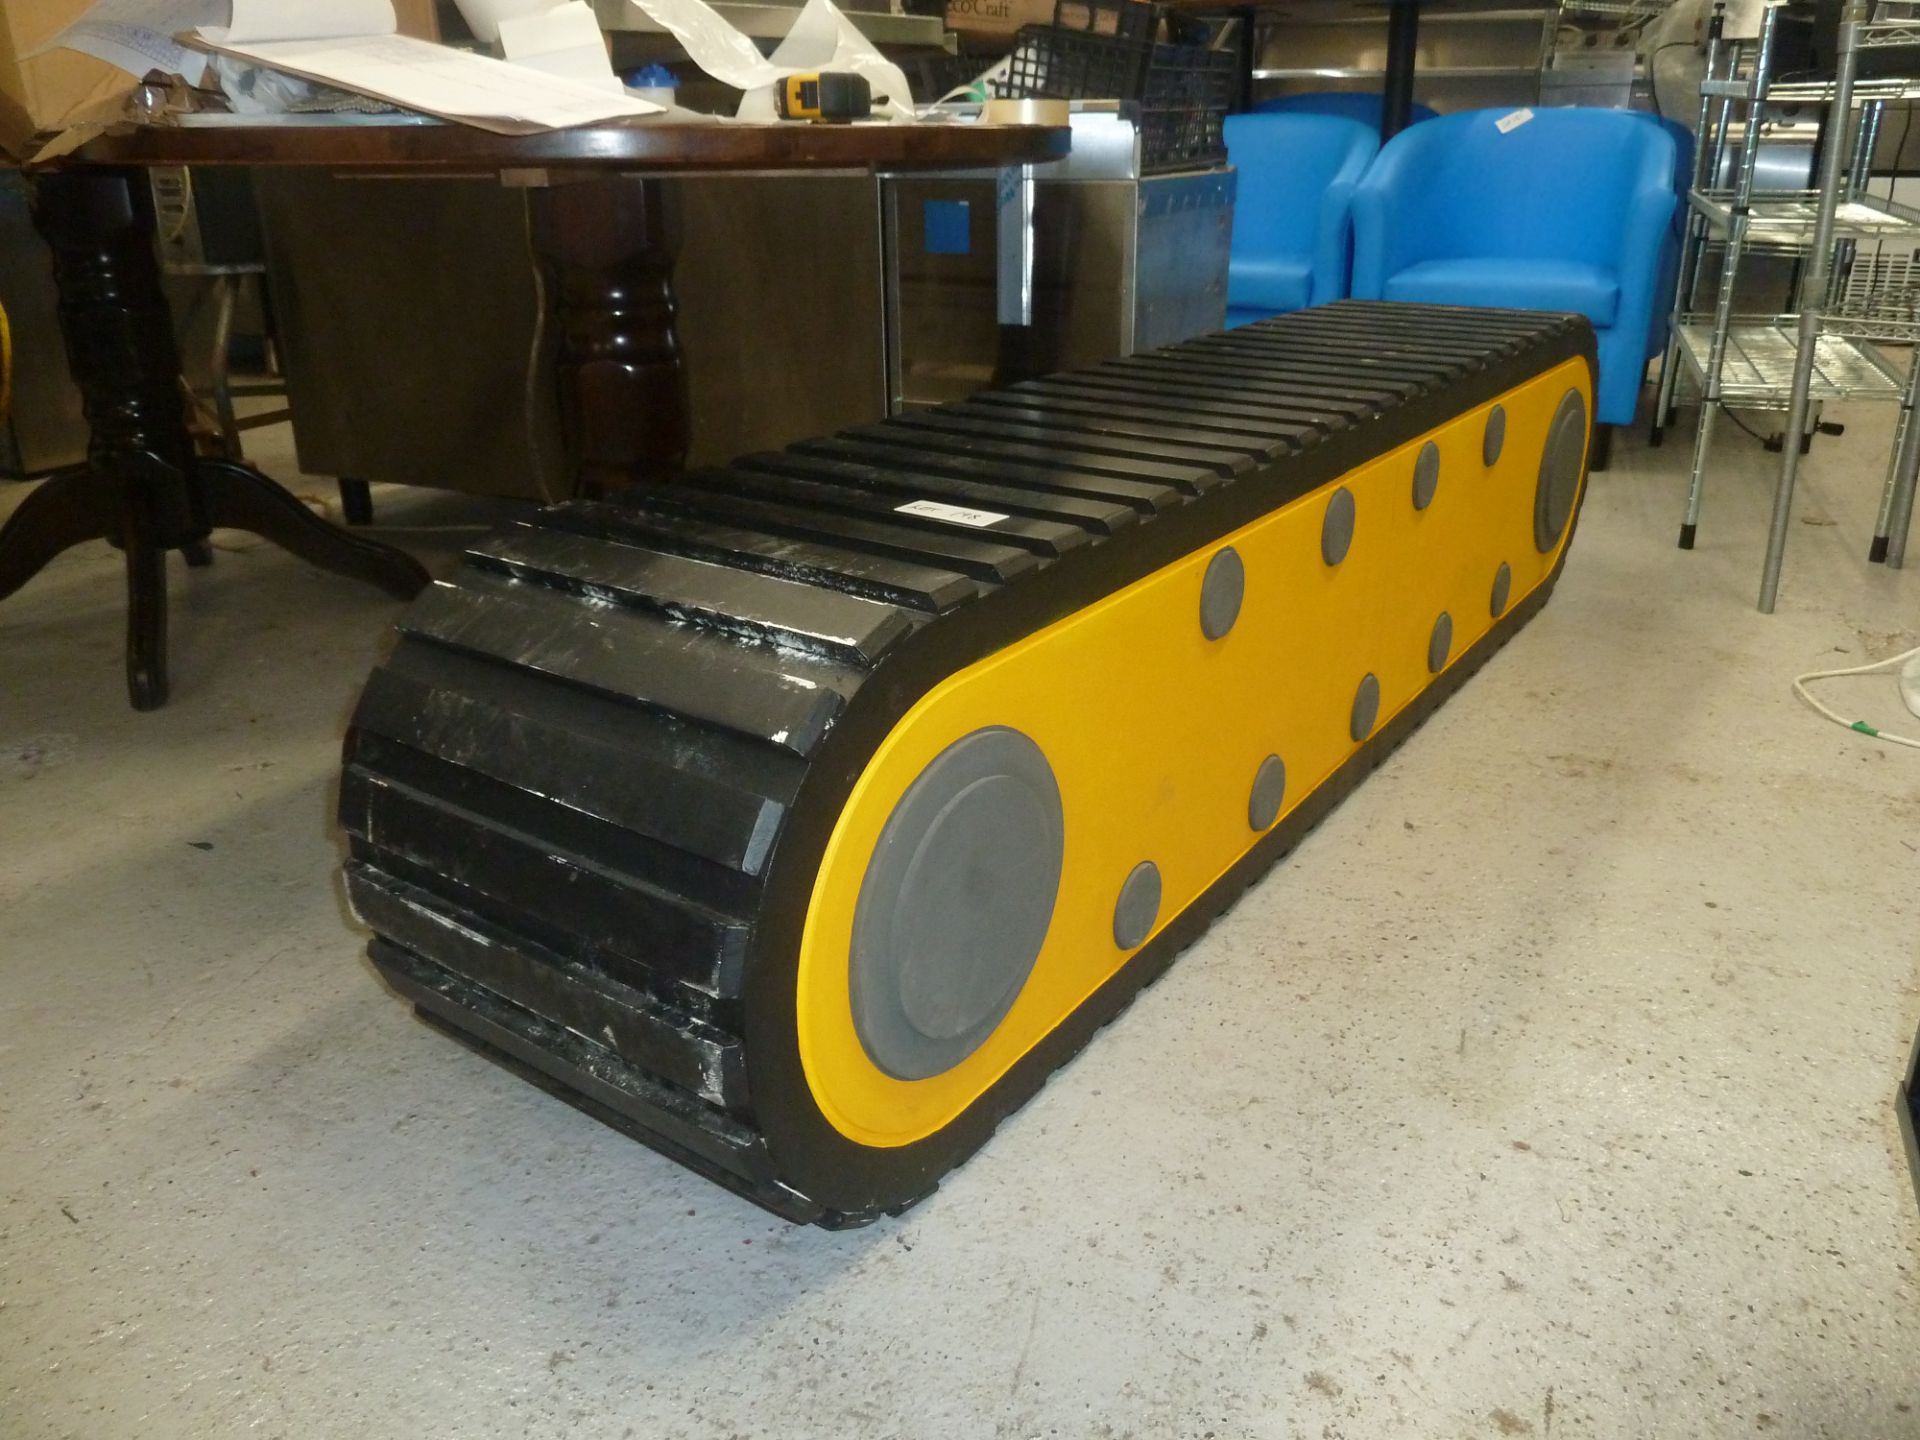 * bespoke made long bench - robot style 2100 x 400 x 500 - Image 2 of 2